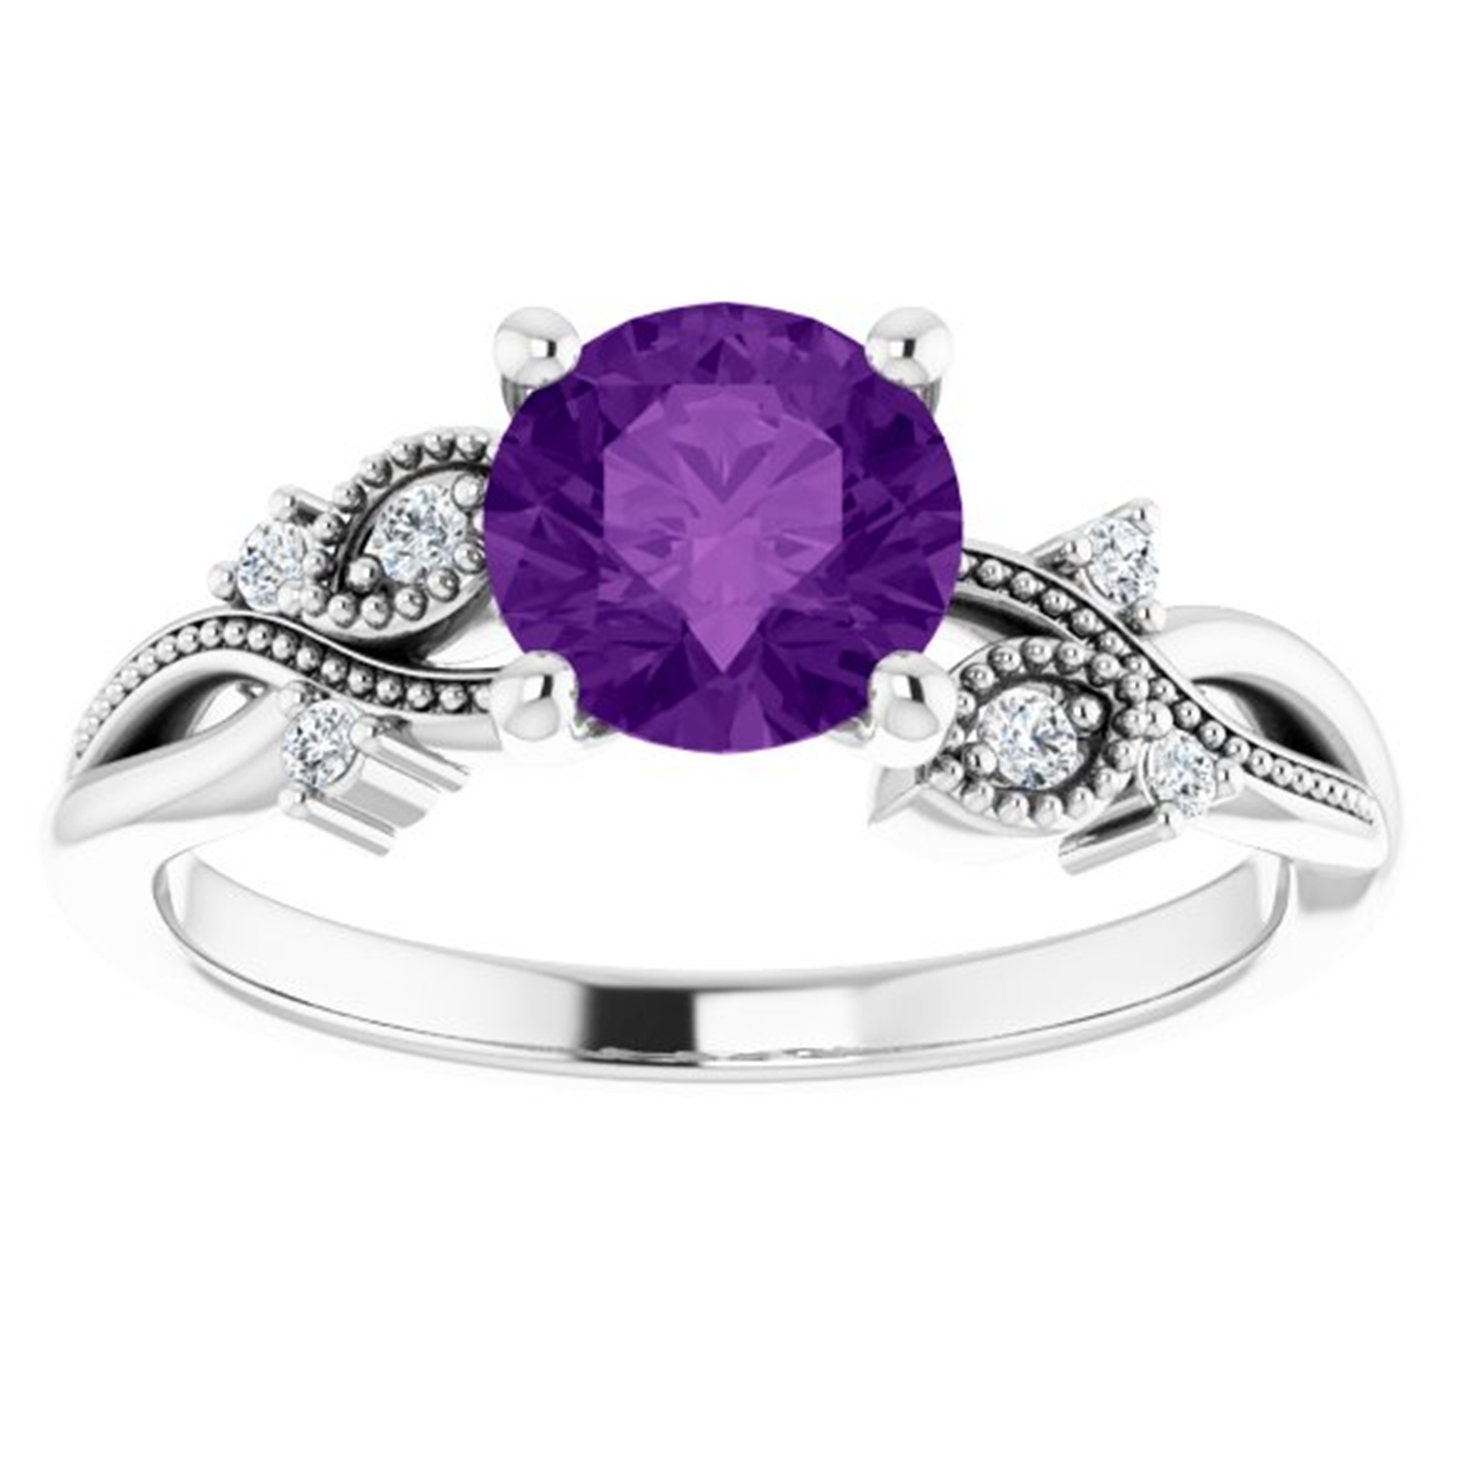 discounts shop Custom It to Take Engagement Wedding Ring, 14K